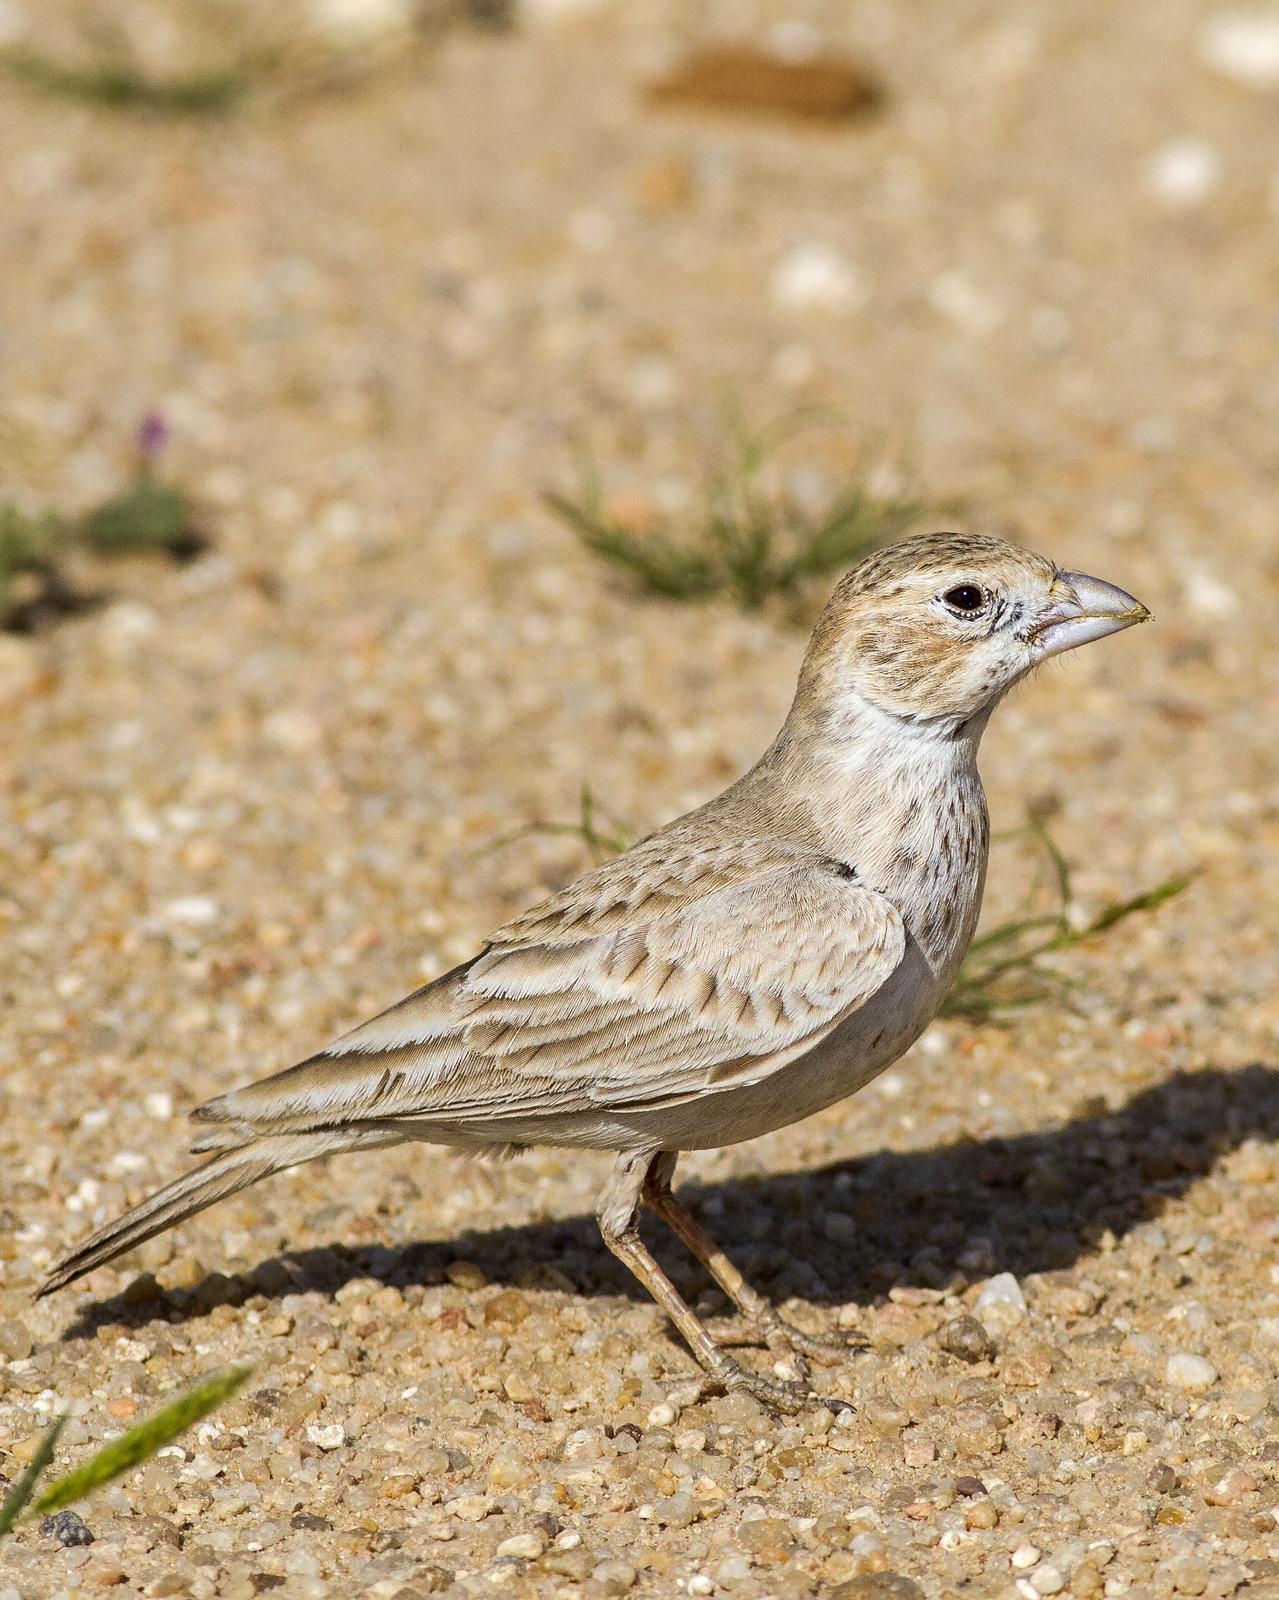 Black-crowned Sparrow-Lark Photo by Humoud Alshayji